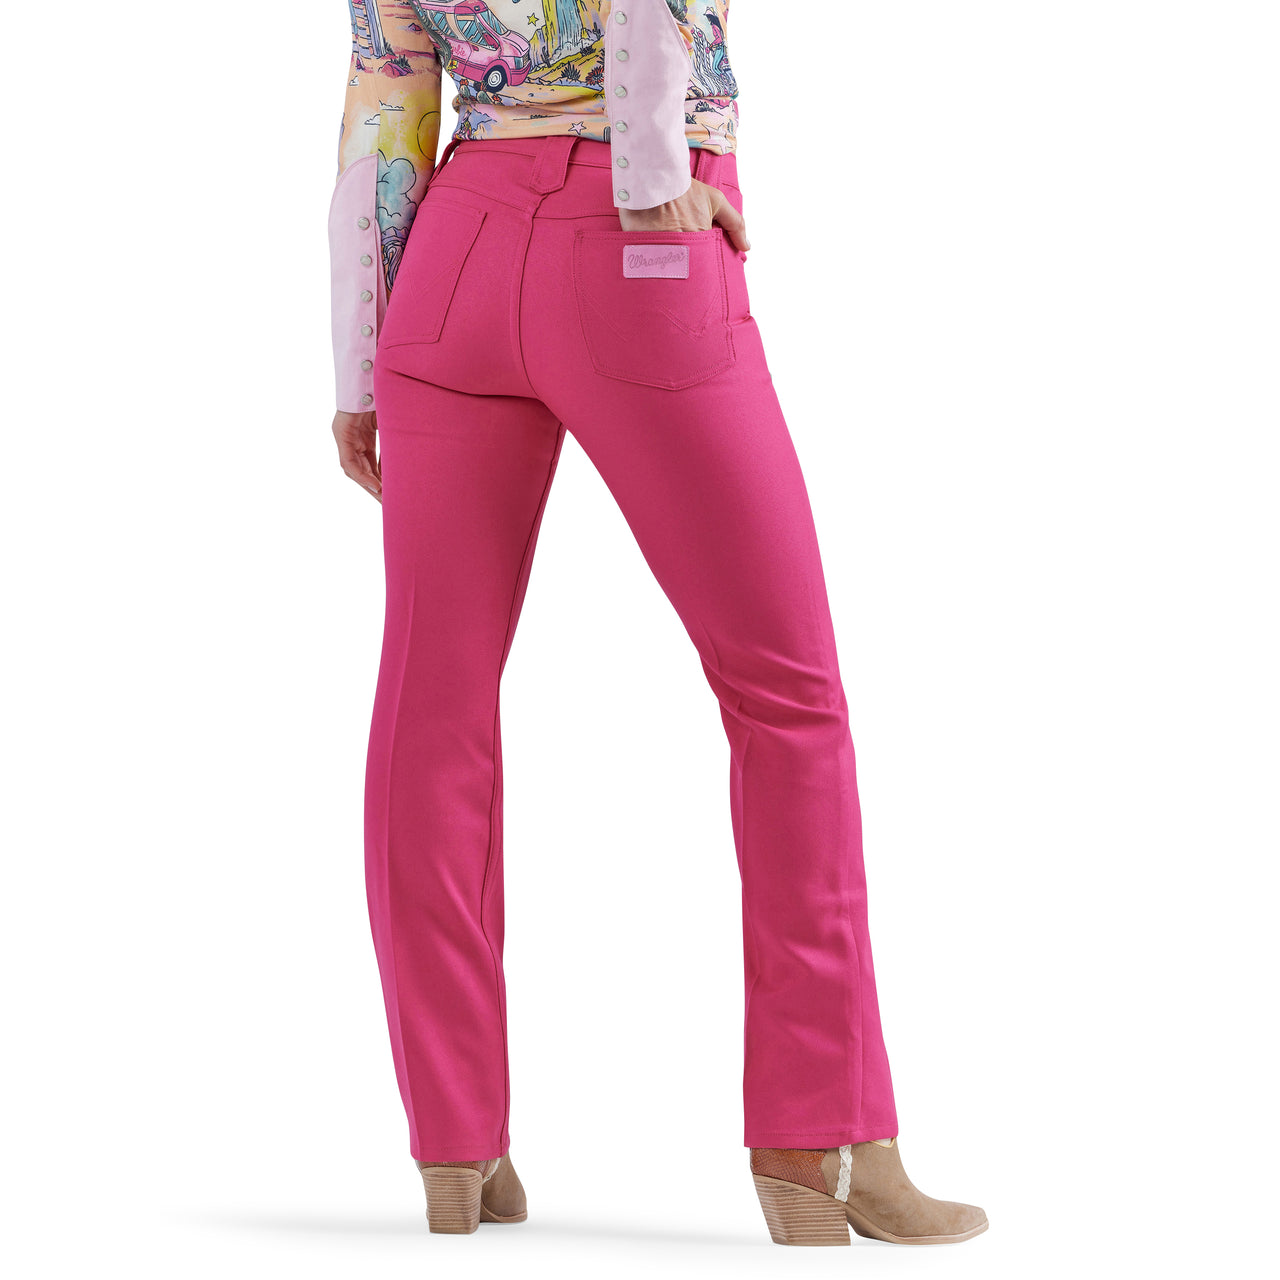 Wrangler X Barbie Women's Wrancher Jeans - Pink